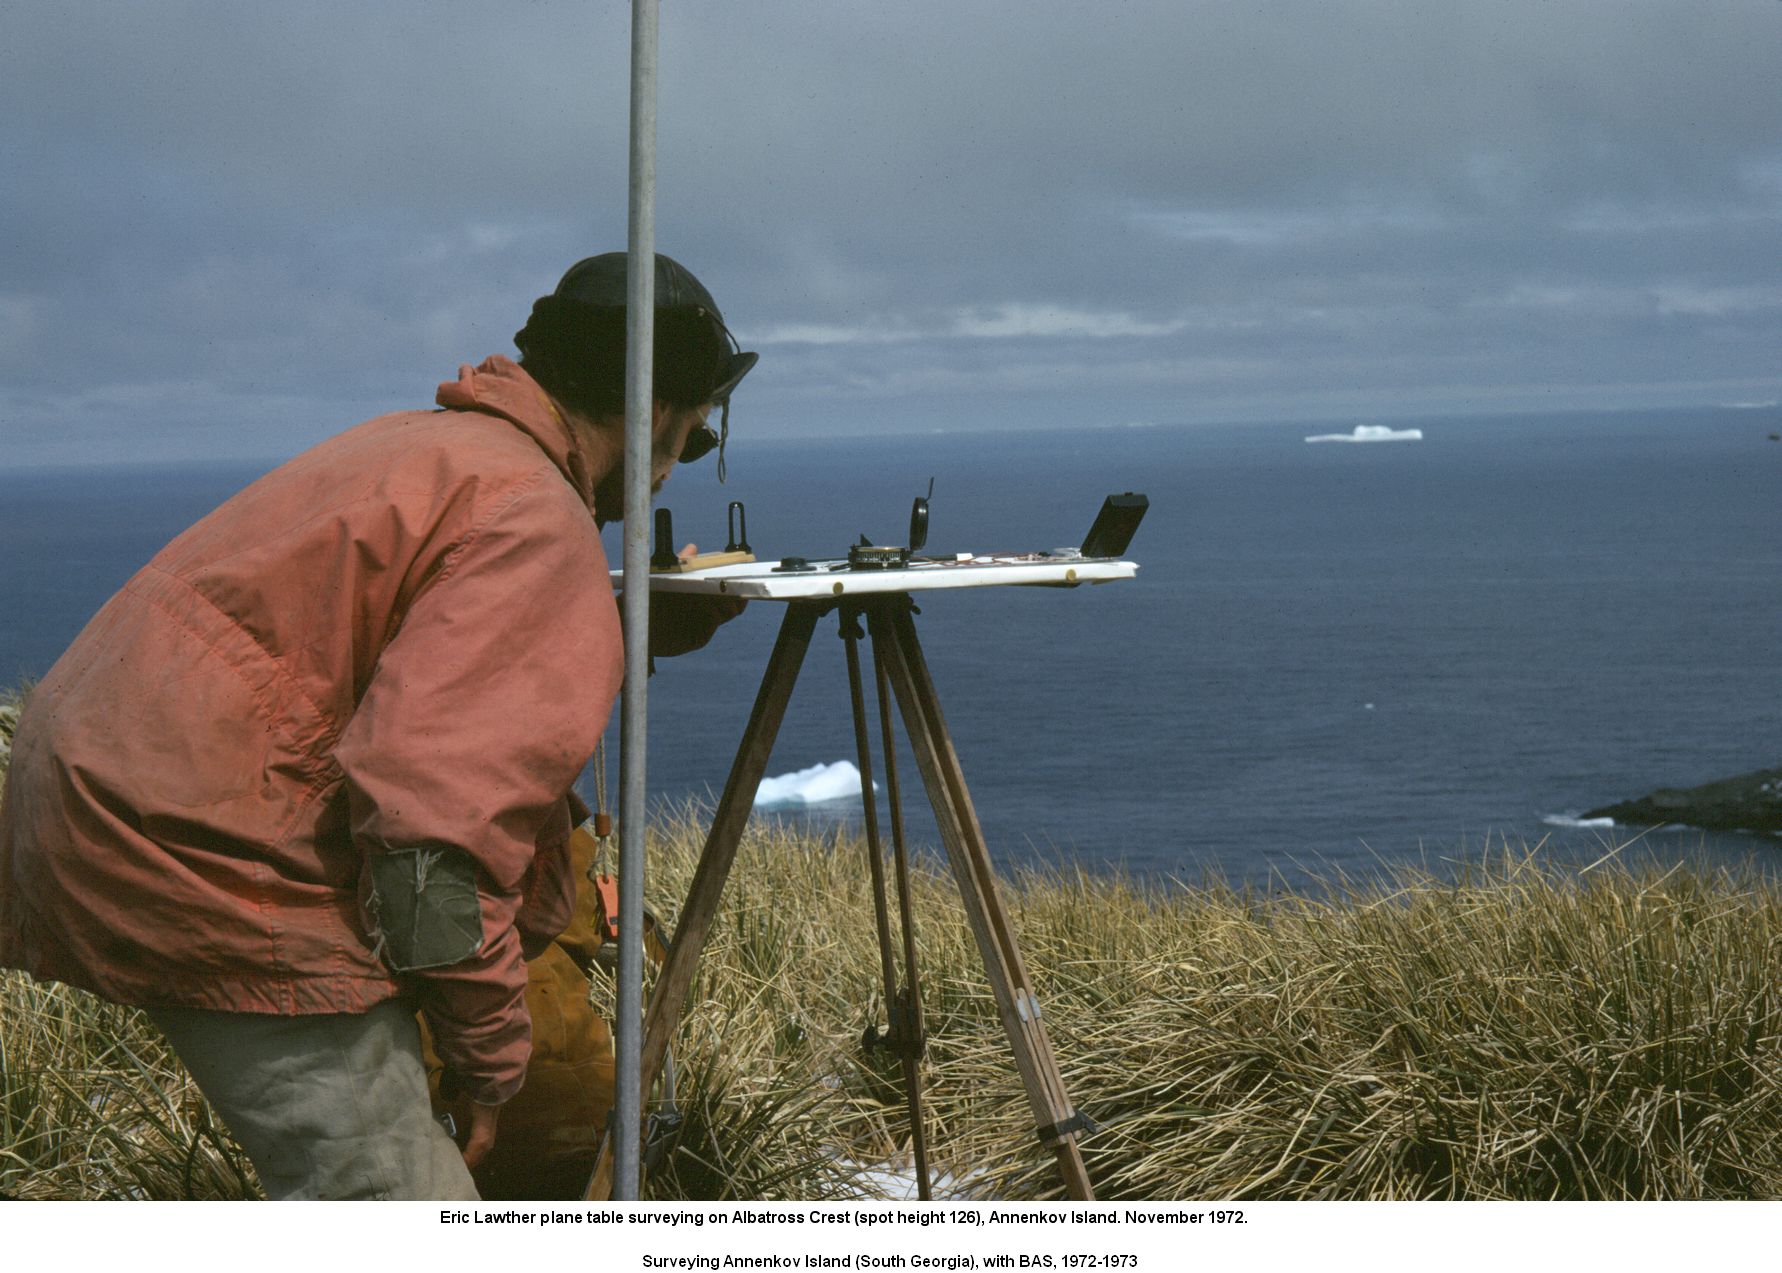 Eric Lawther plane table surveying on Albatross Crest (spot height 126), Annenkov Island. November 1972.